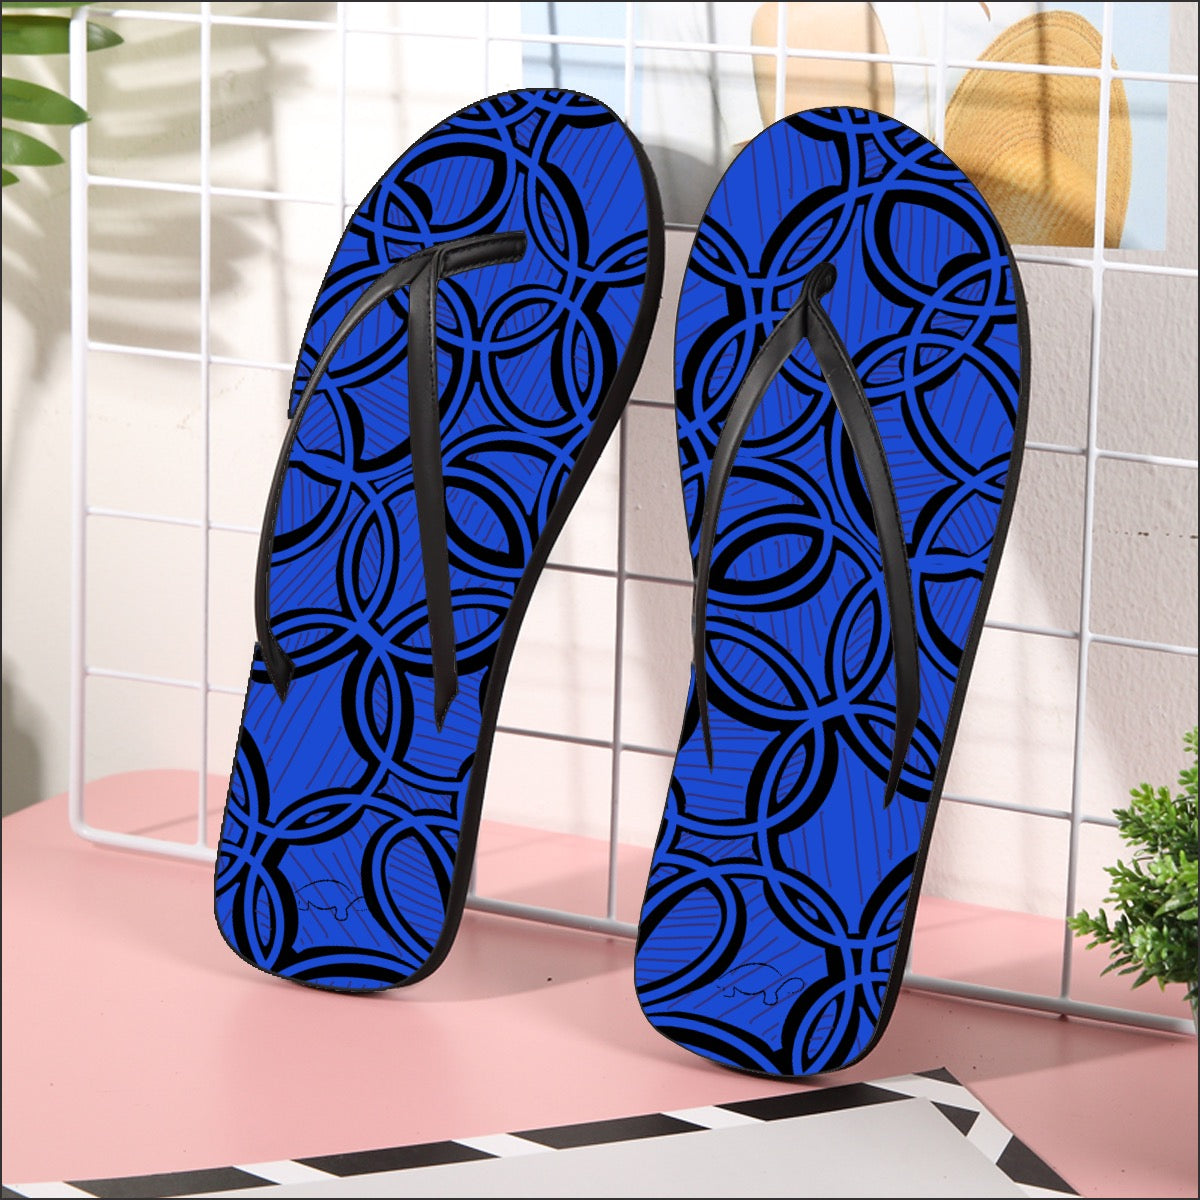 Geometric Dark Blue Women's Flip Flops. Beach wear. Design hand-painted by the Designer Maria Alejandra Echenique